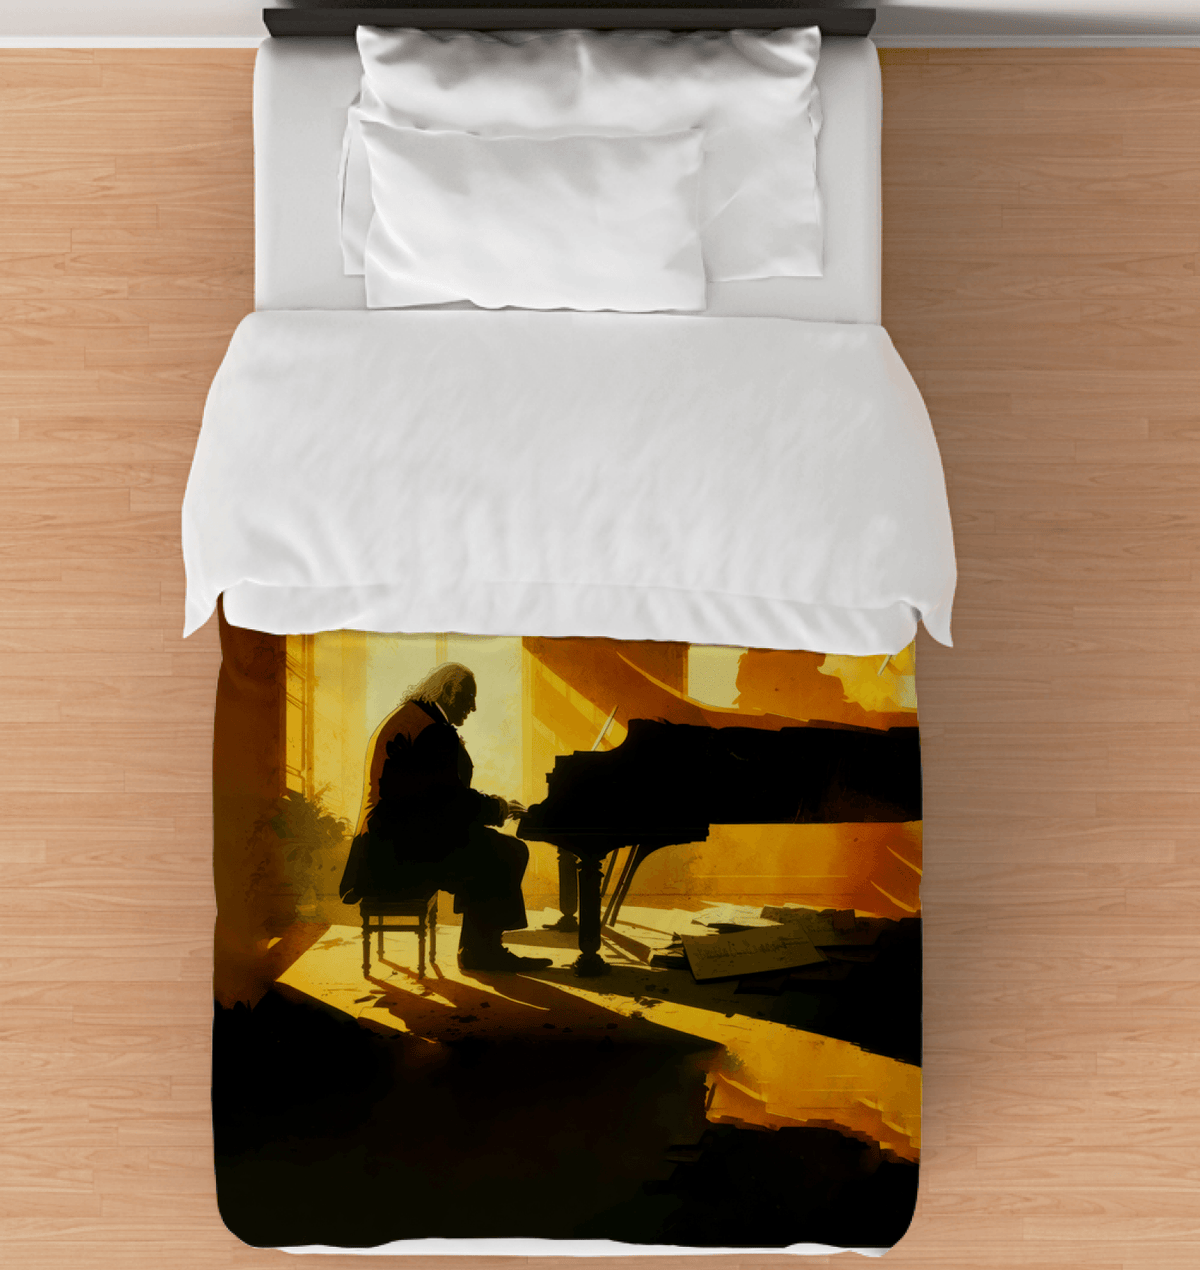 Rock Star Dreams Comforter Set: Musical Bedroom Decor - Beyond T-shirts